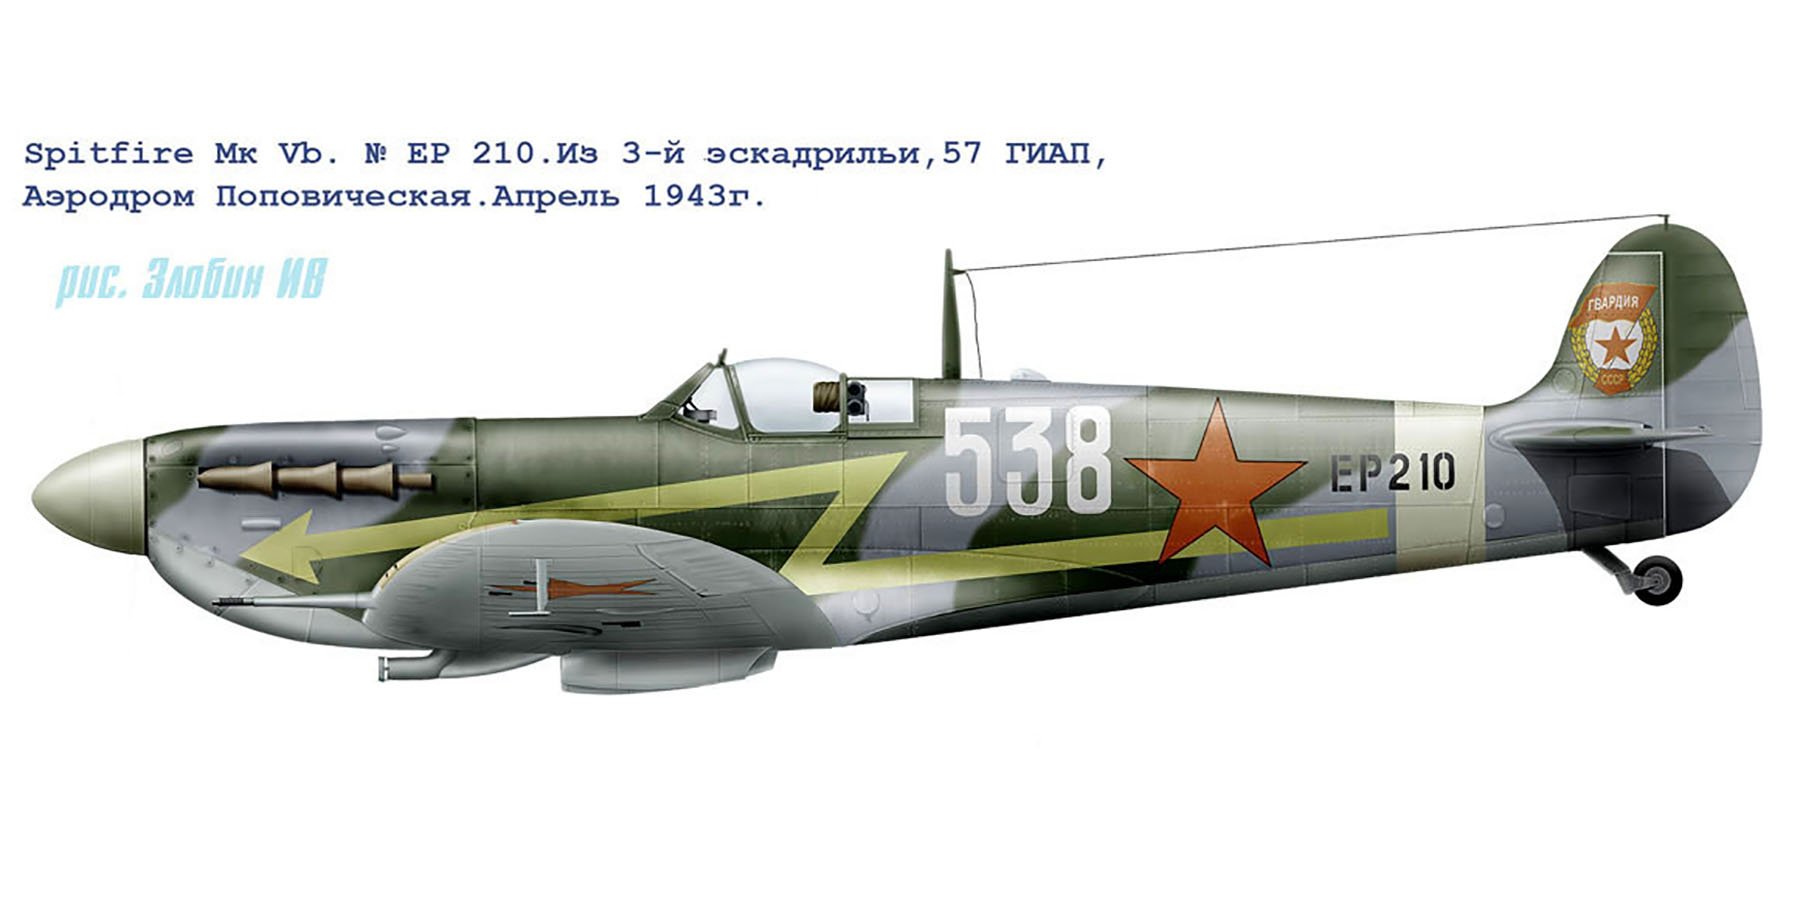 Spitfire MkVb USSR 57GvIAP White 538 EP210 Kuban 1943 0A